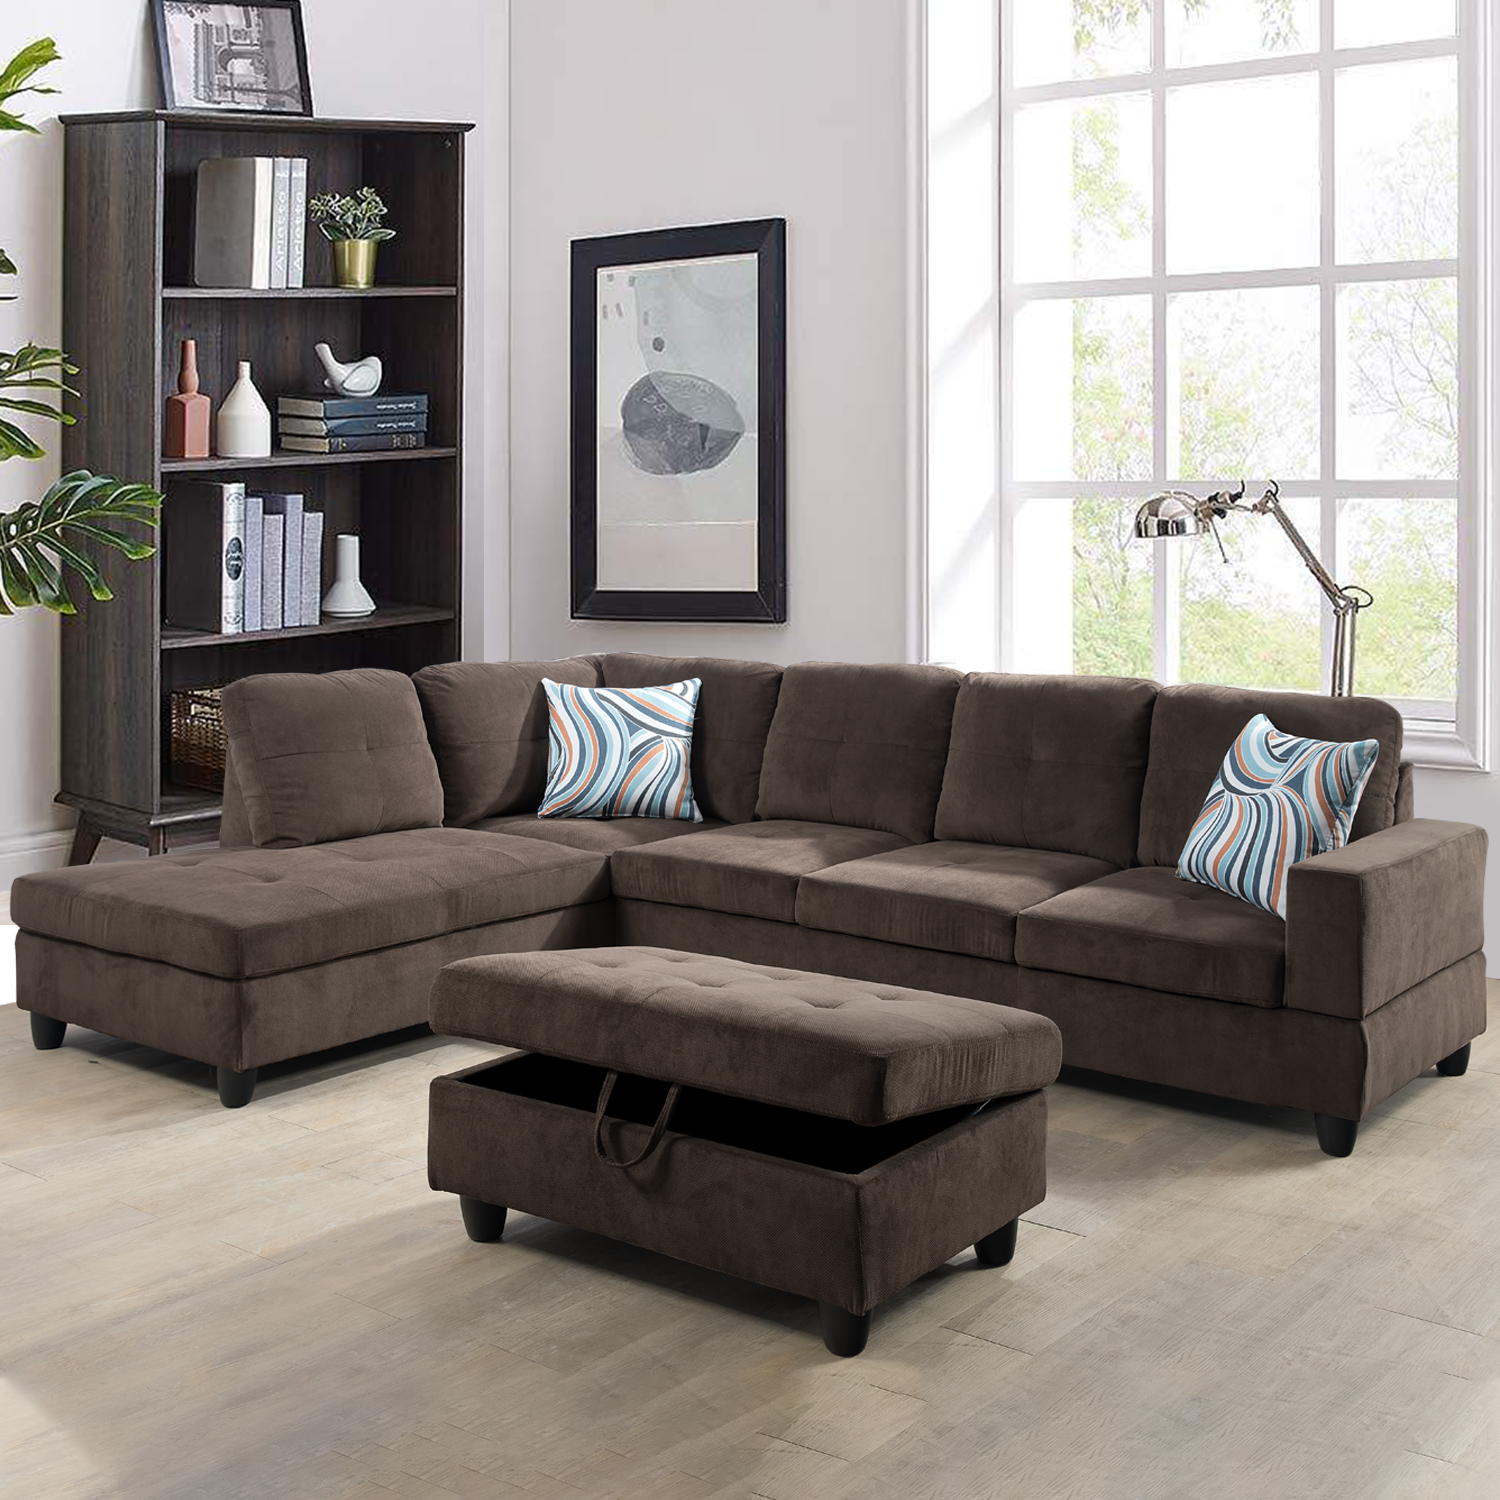 Ainehome Brown L-Shape Corduroy Fabric Combo Sofa Set